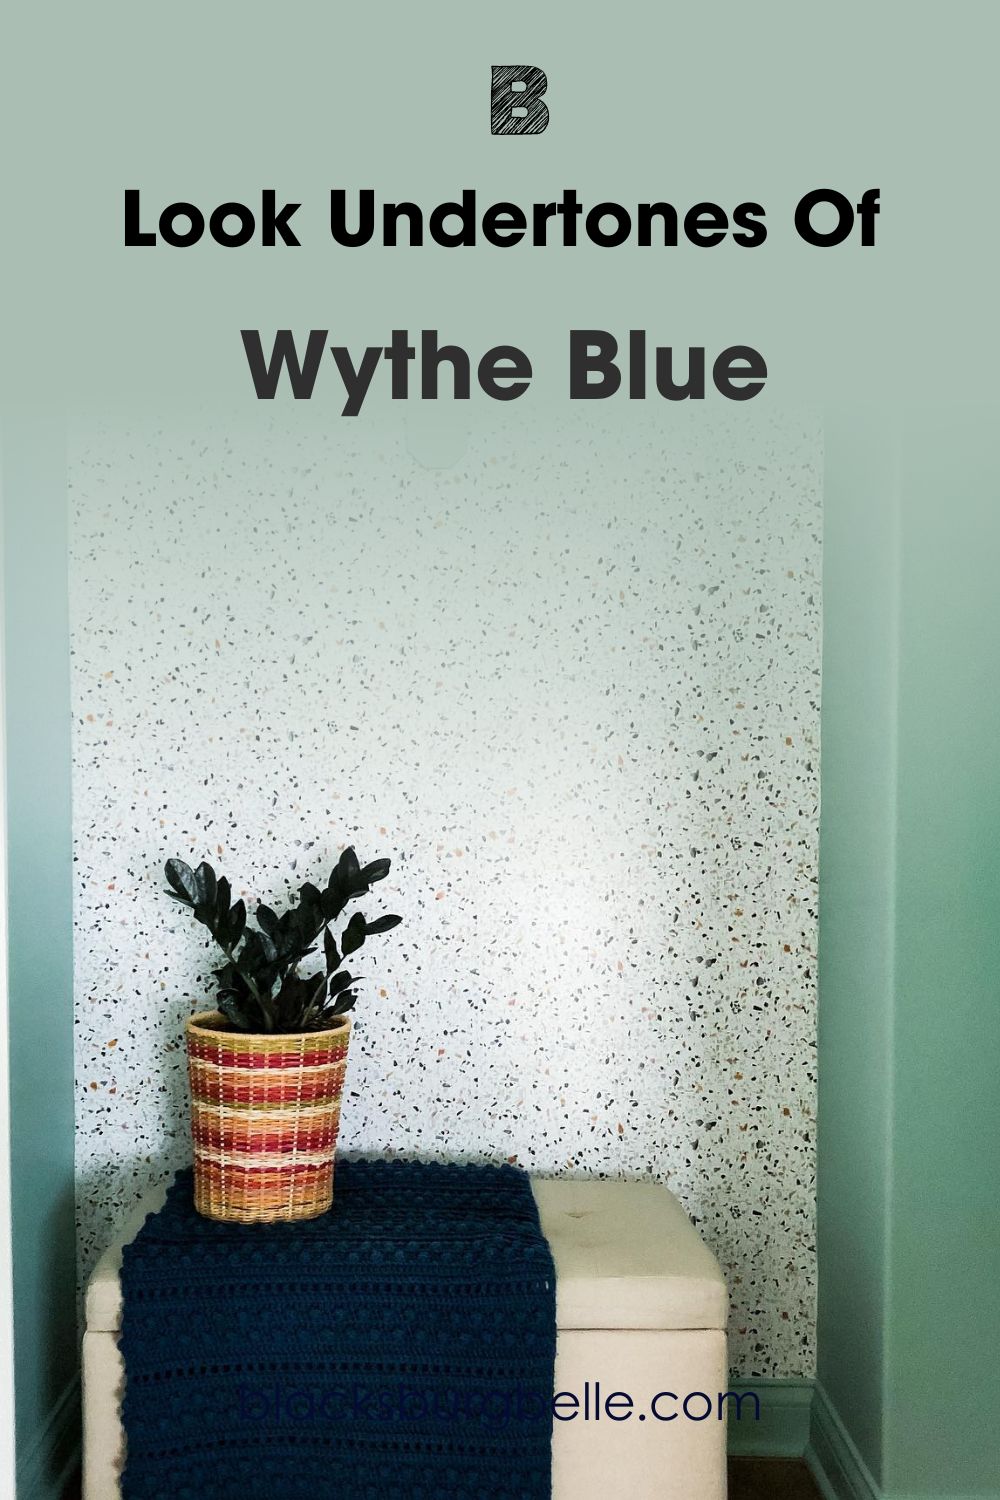 Spotting the Undertones of Wythe Blue